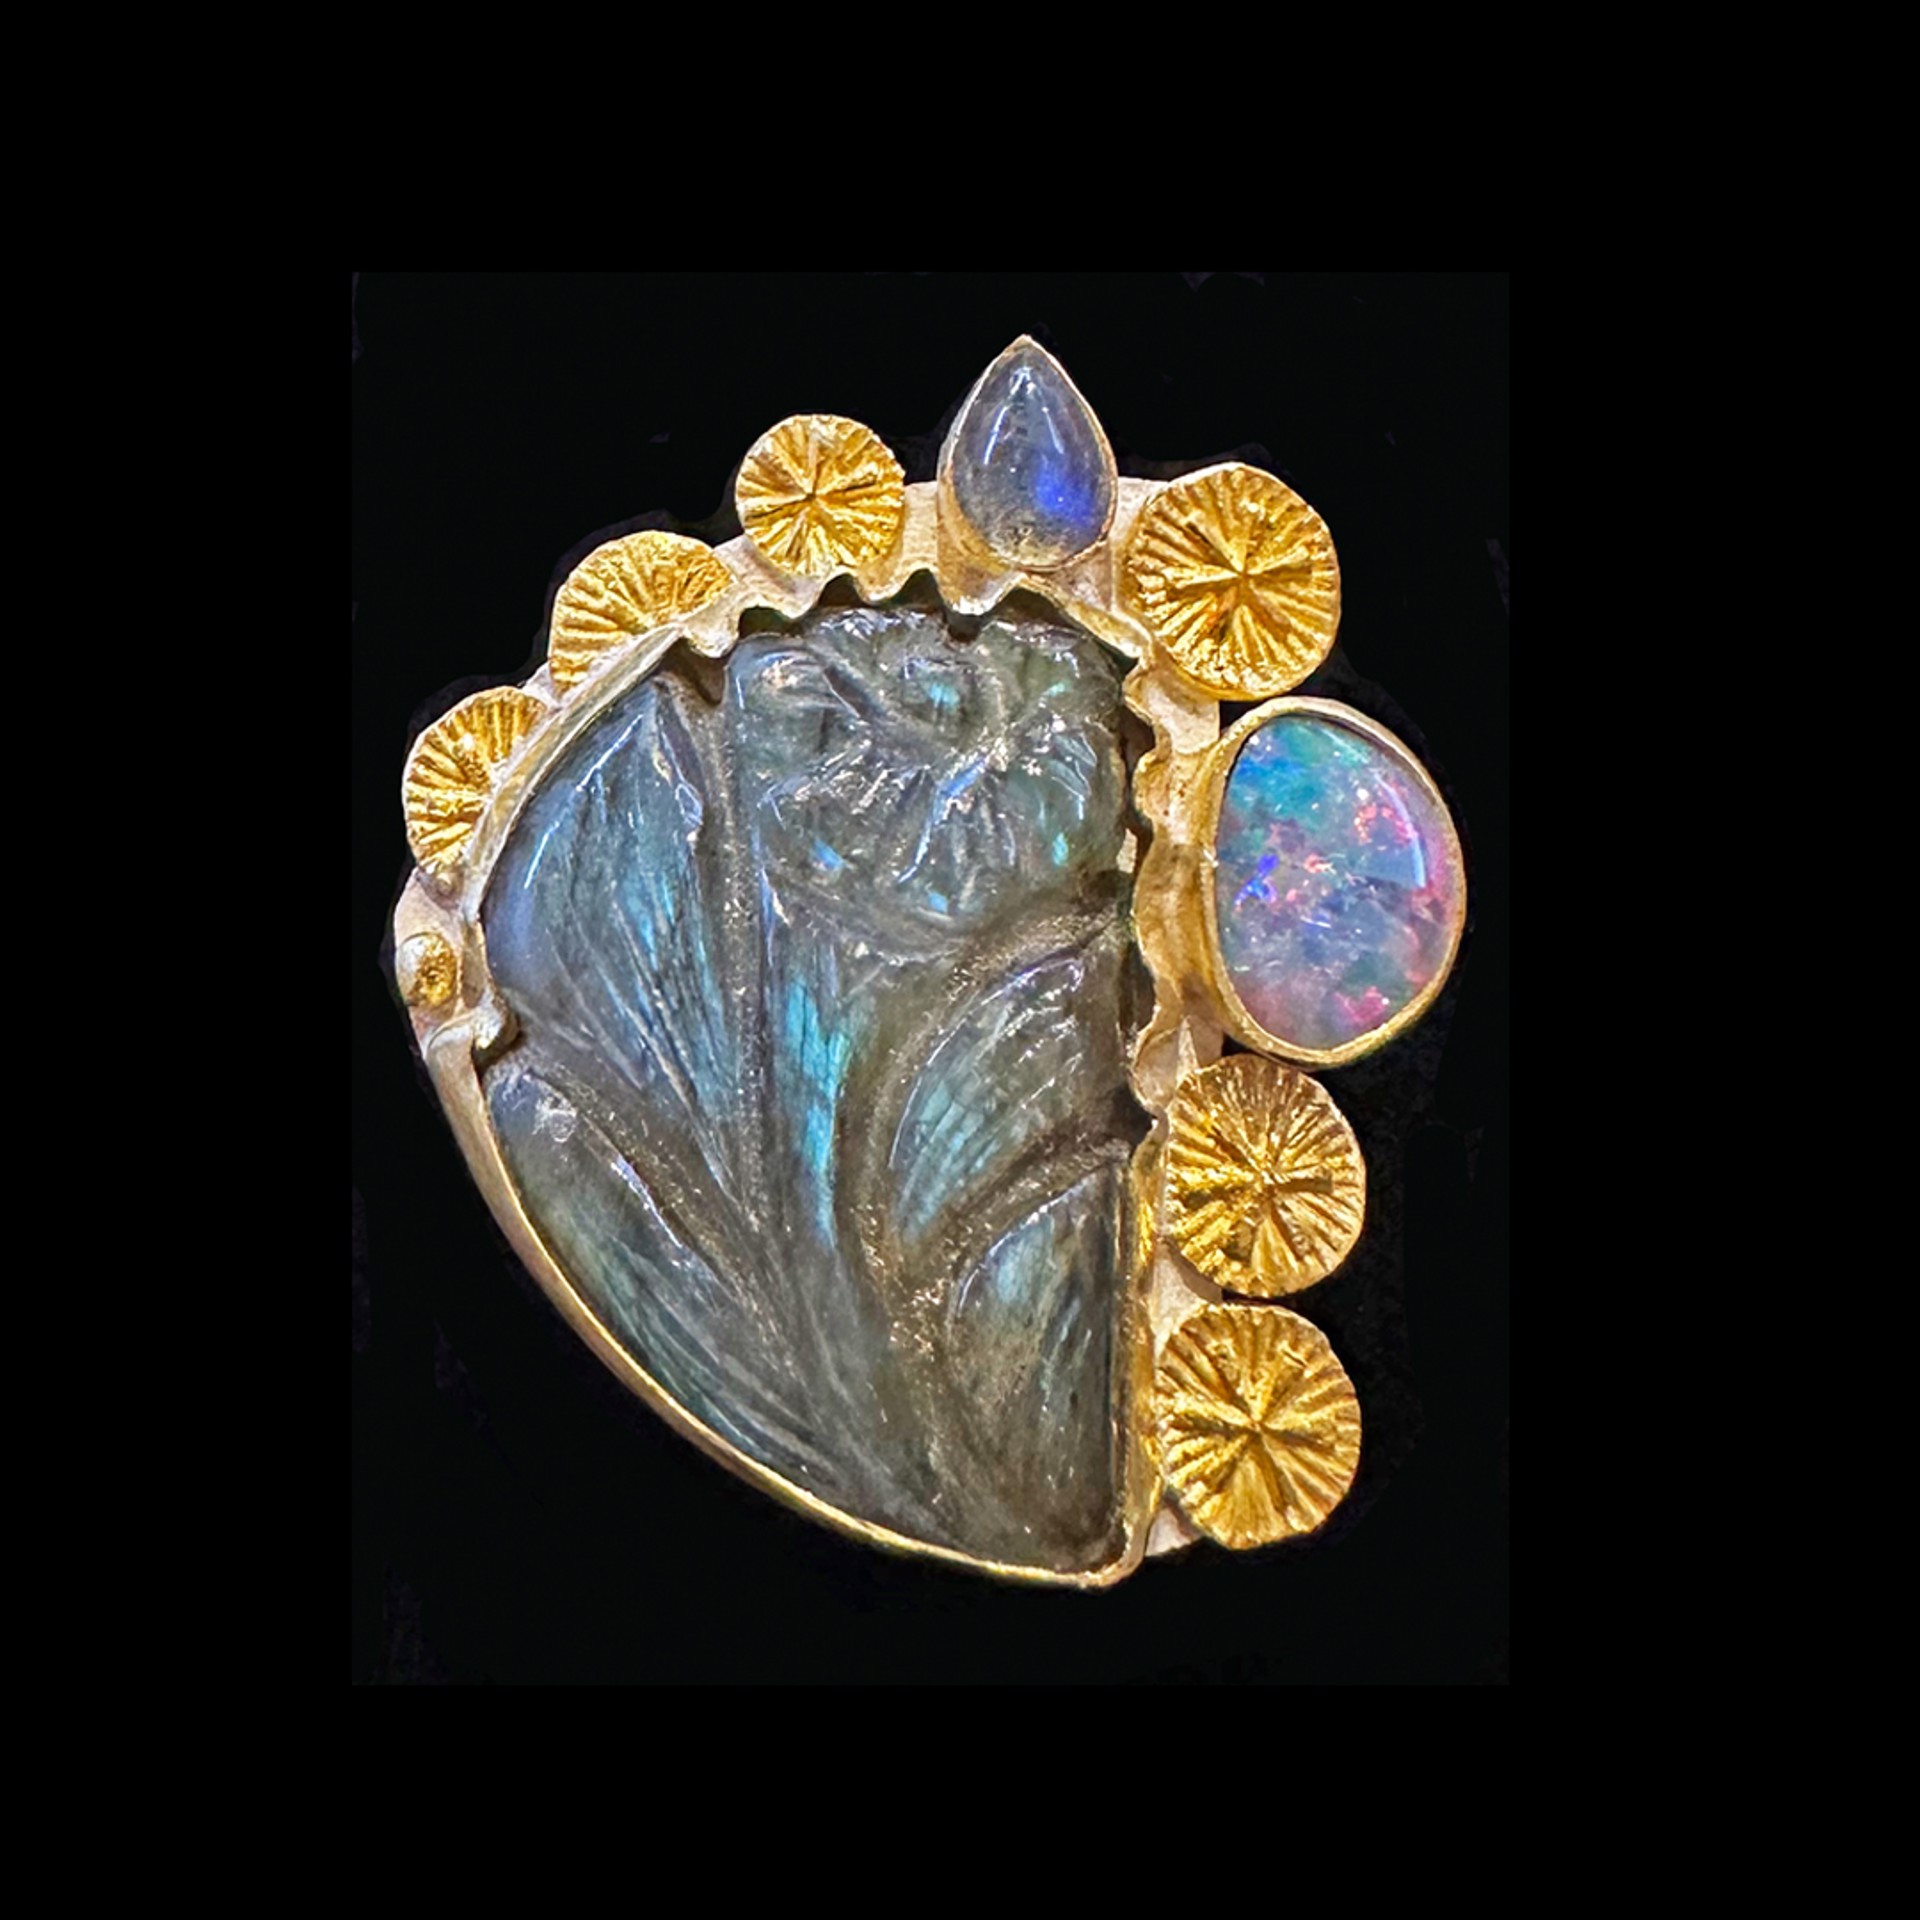 24k Gold and Labradorite, Australian Opal and Moonstone Ring by Marilynn Nicholson